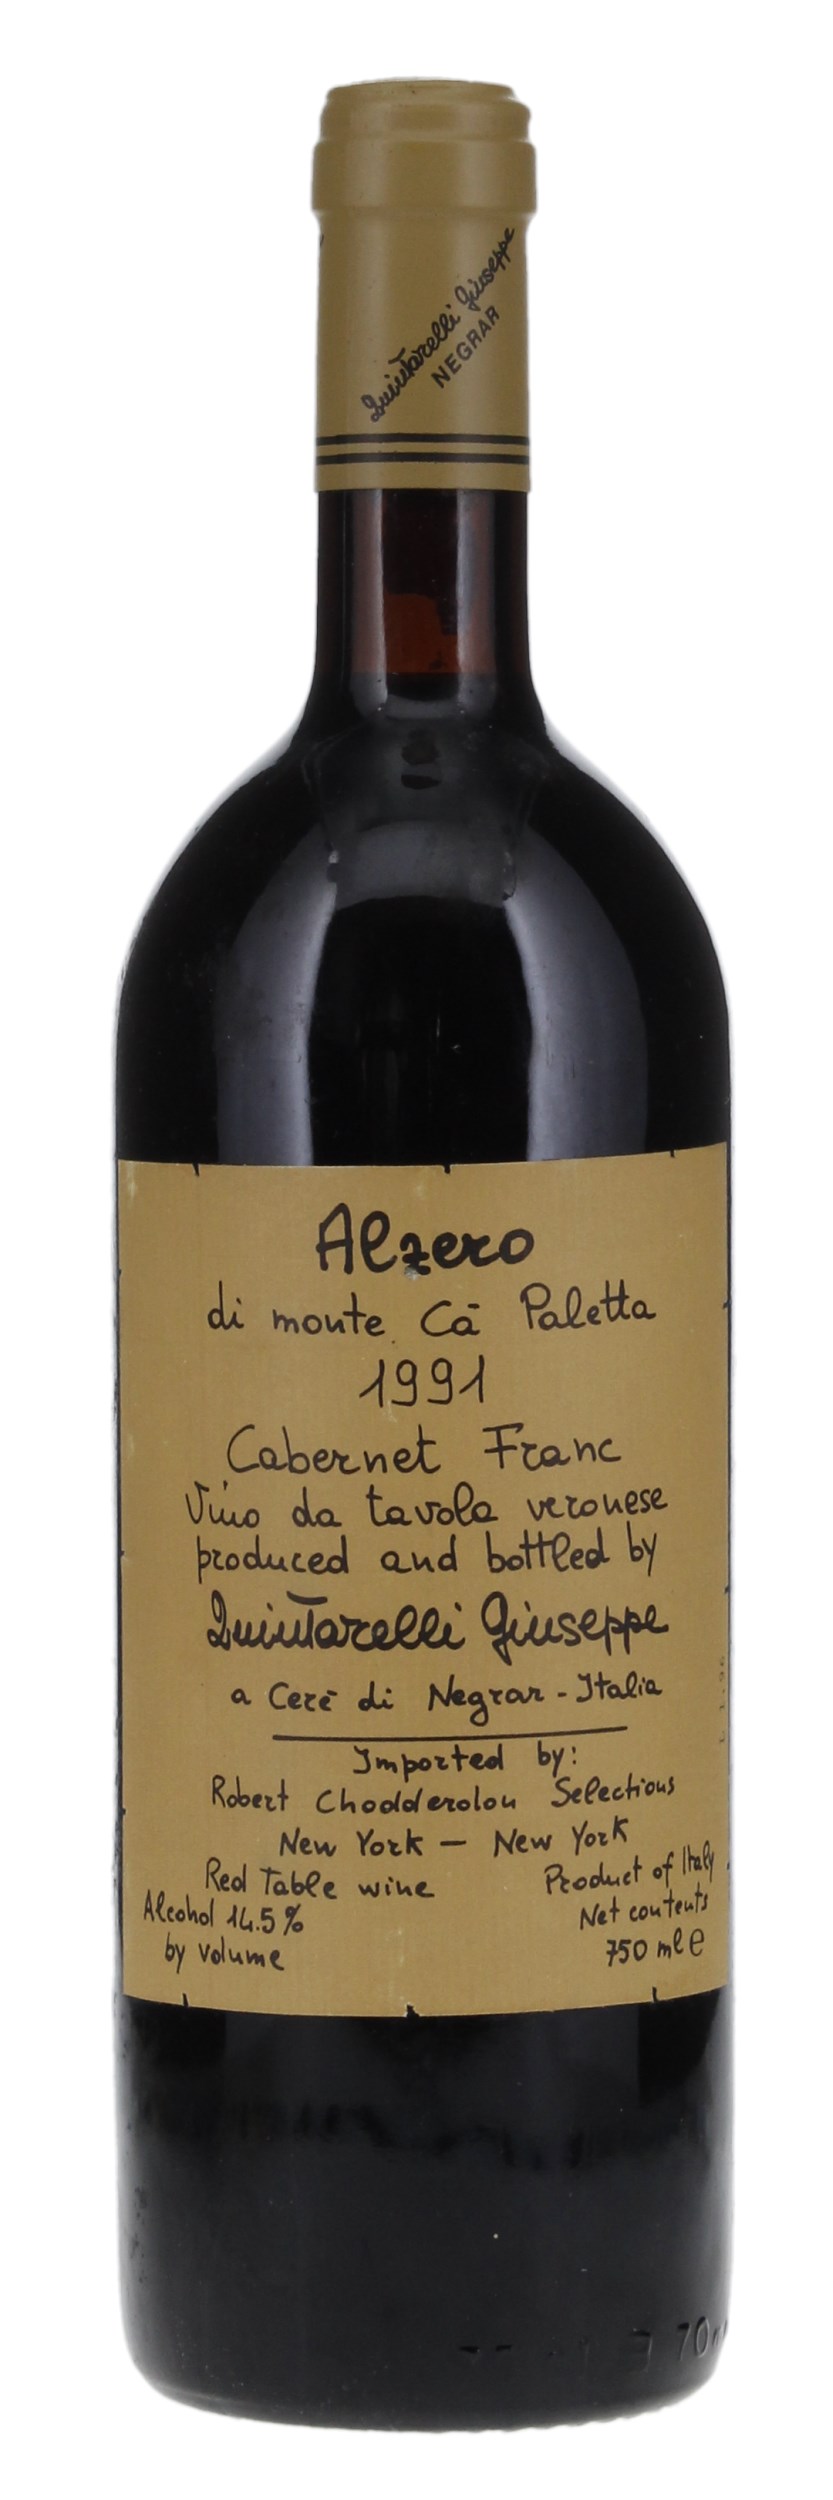 1991 Giuseppe Quintarelli Alzero Cabernet (Franc), 750ml